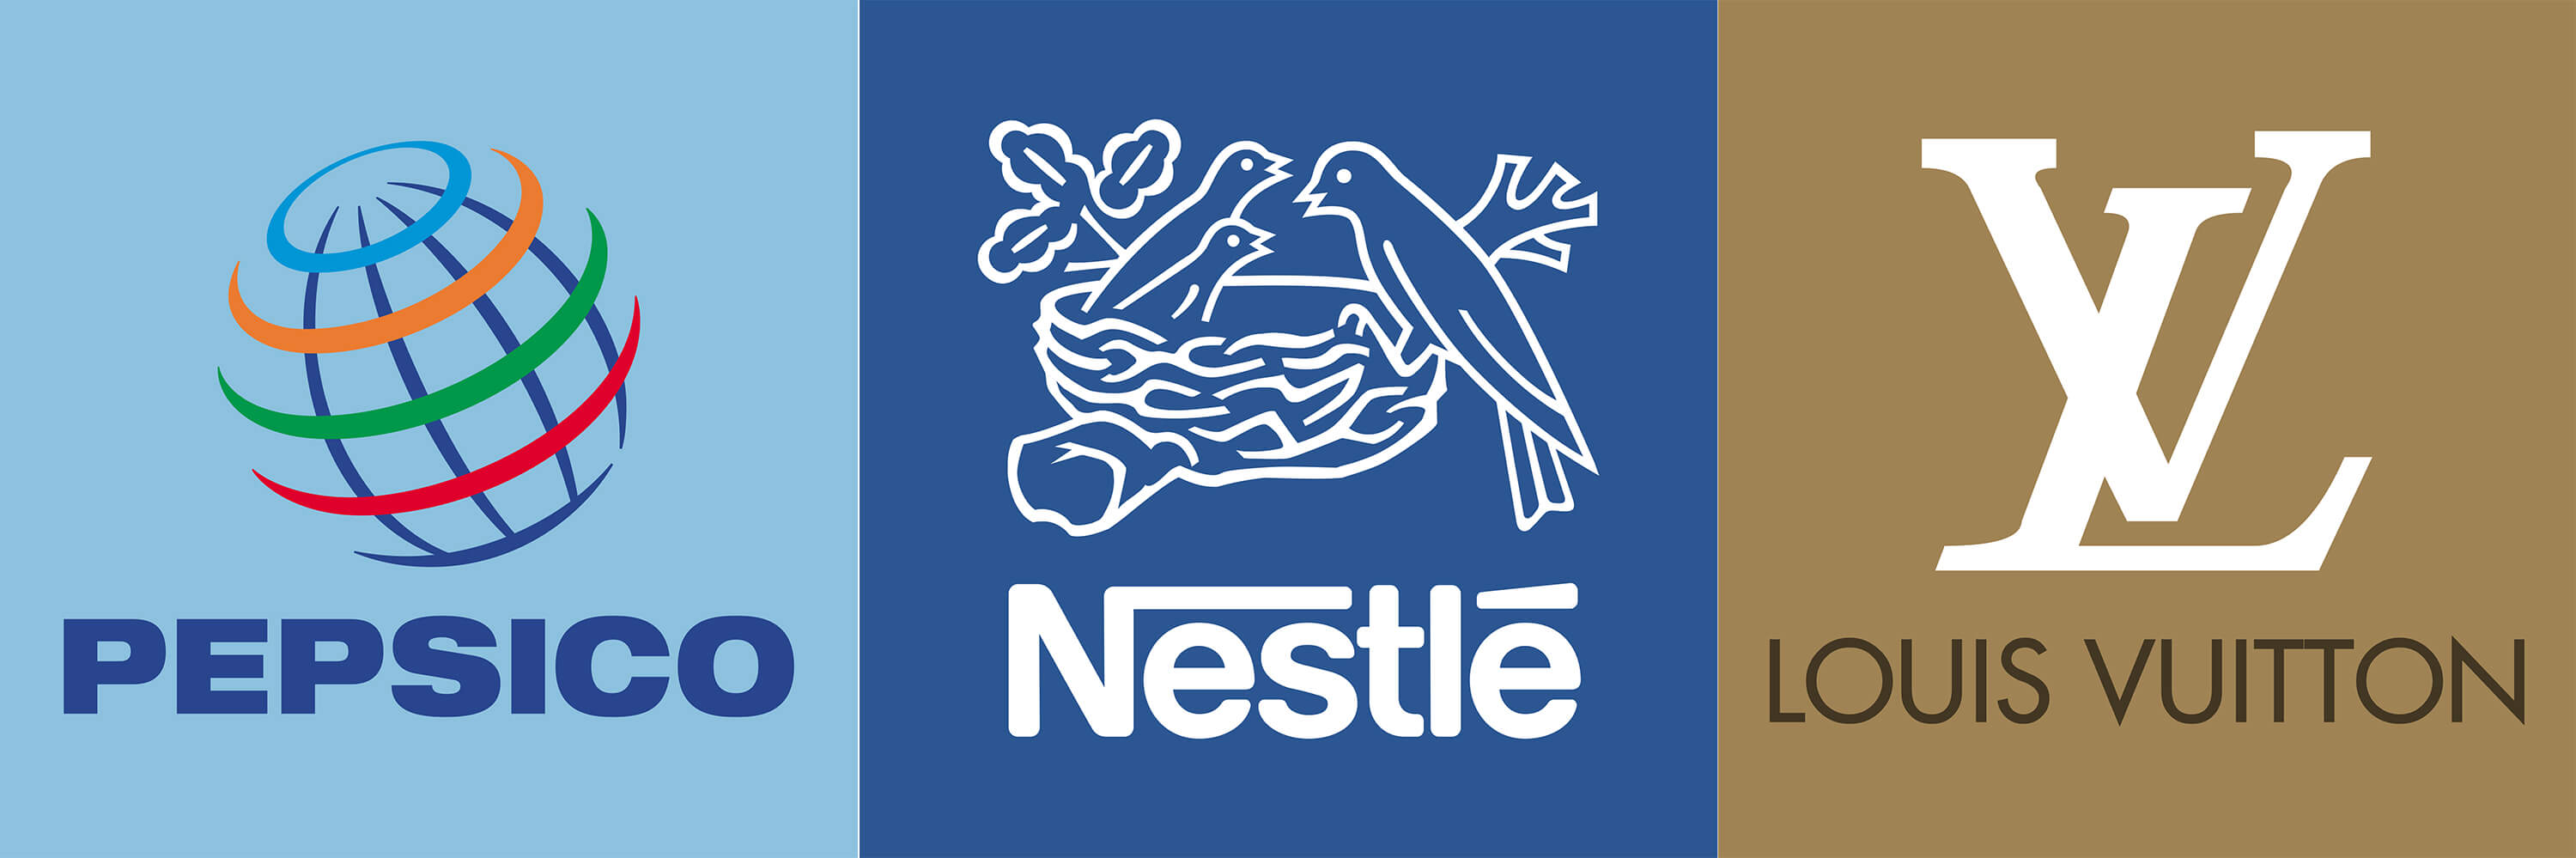 Nestle-LV-Pepsico-Logos